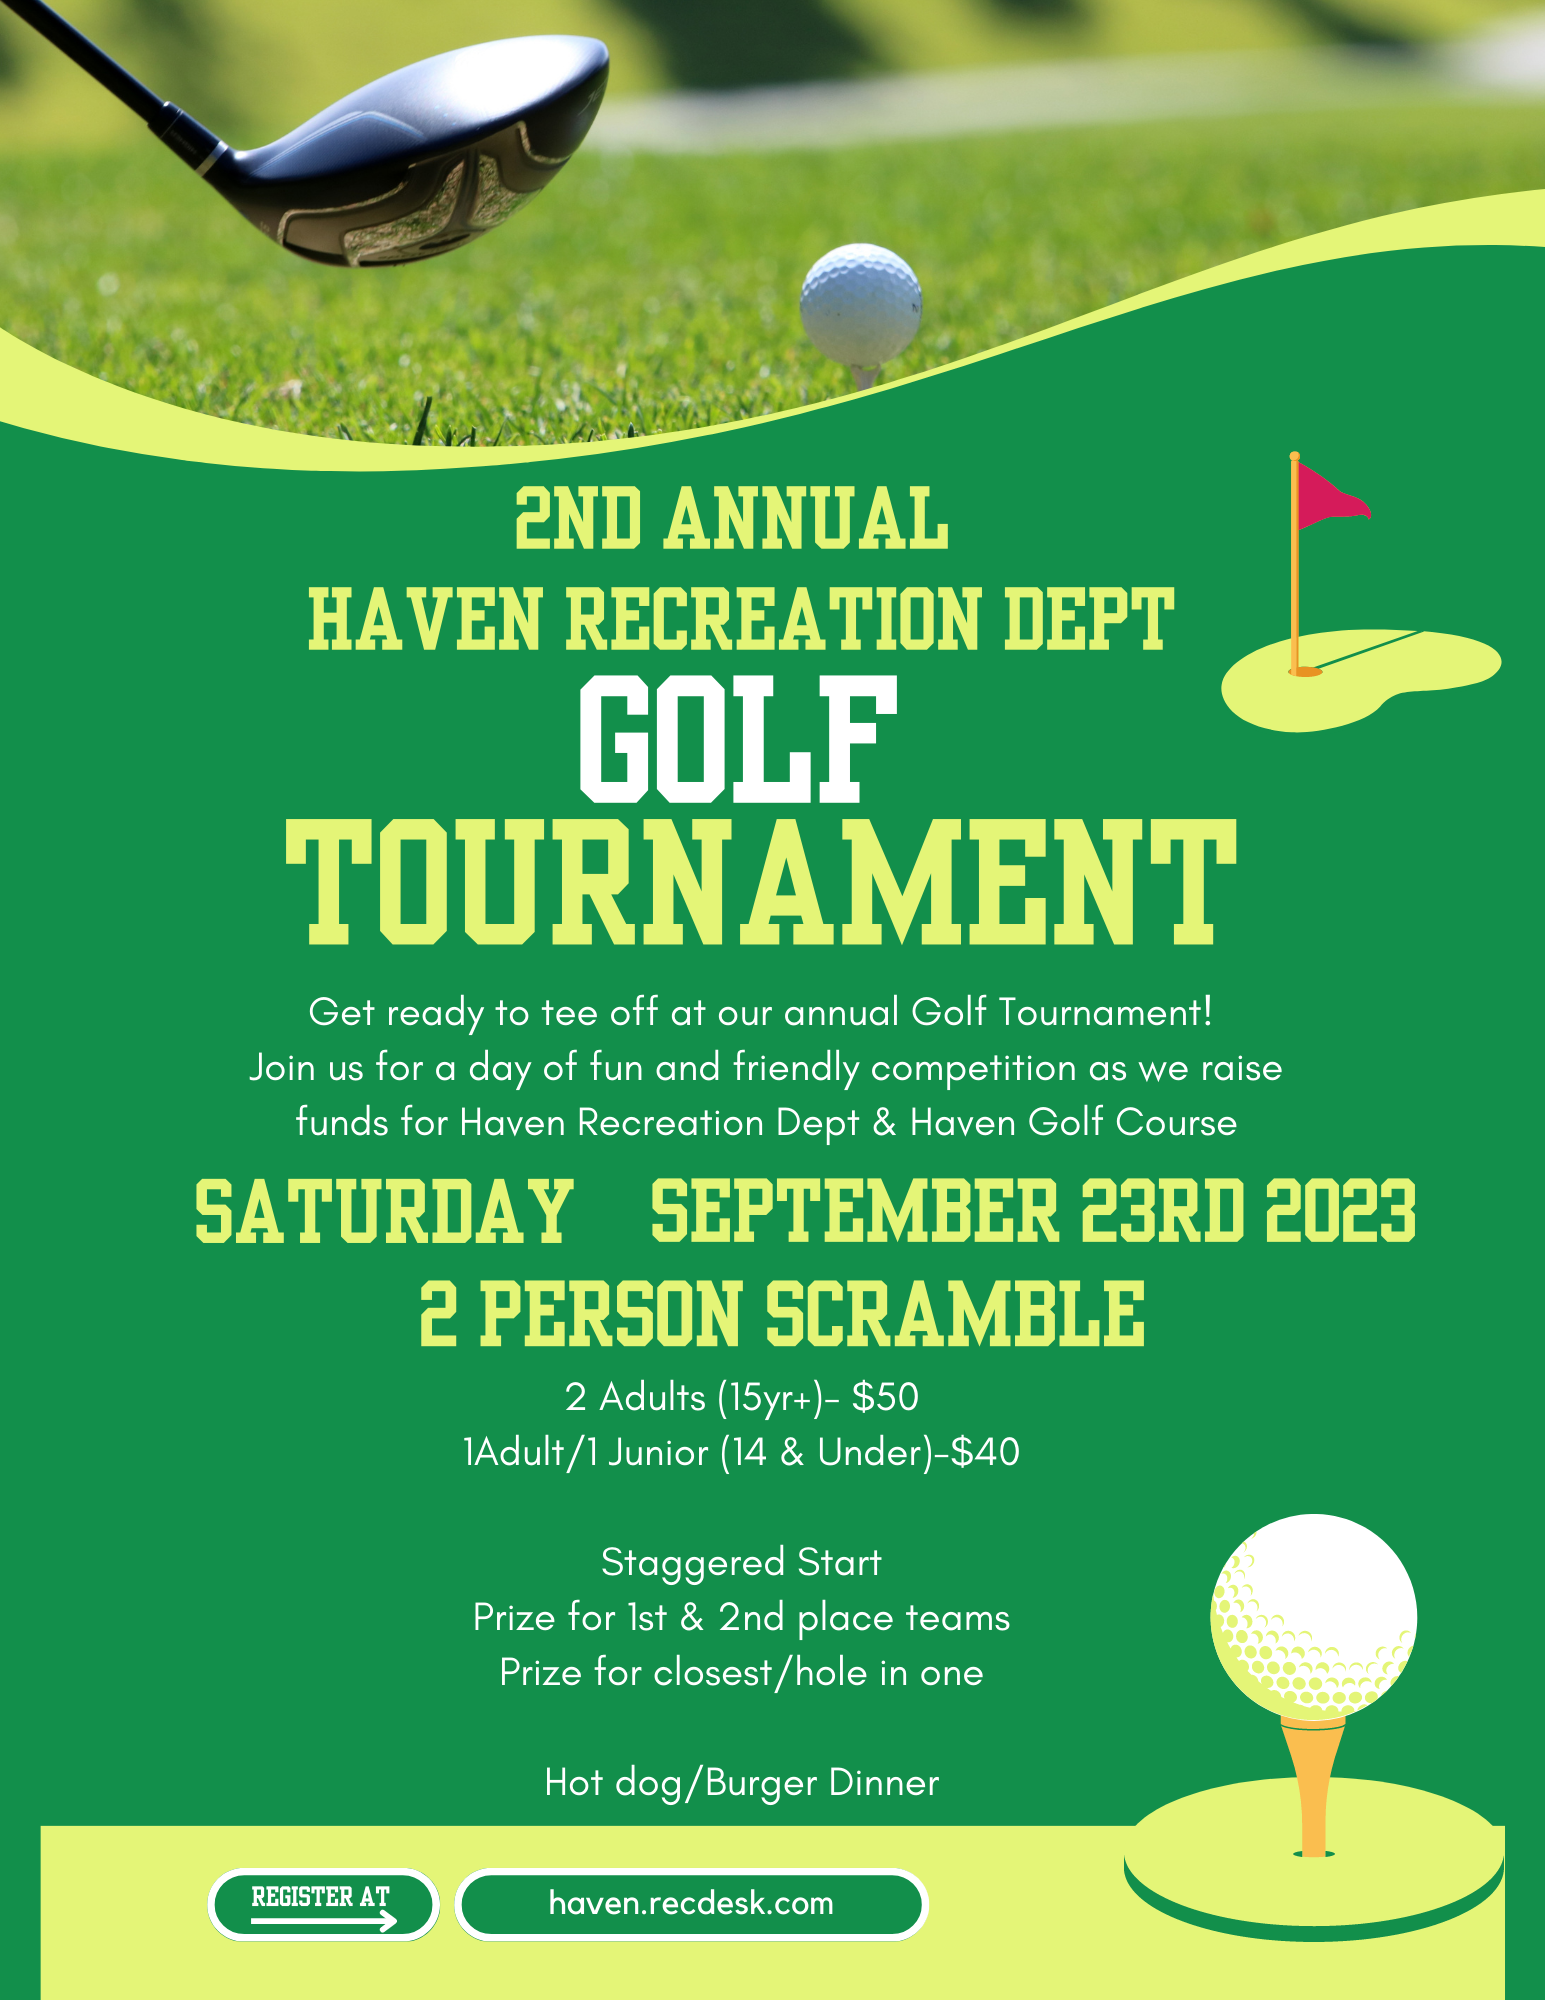 2nd Annual Haven Recreation Dept Golf Tournament